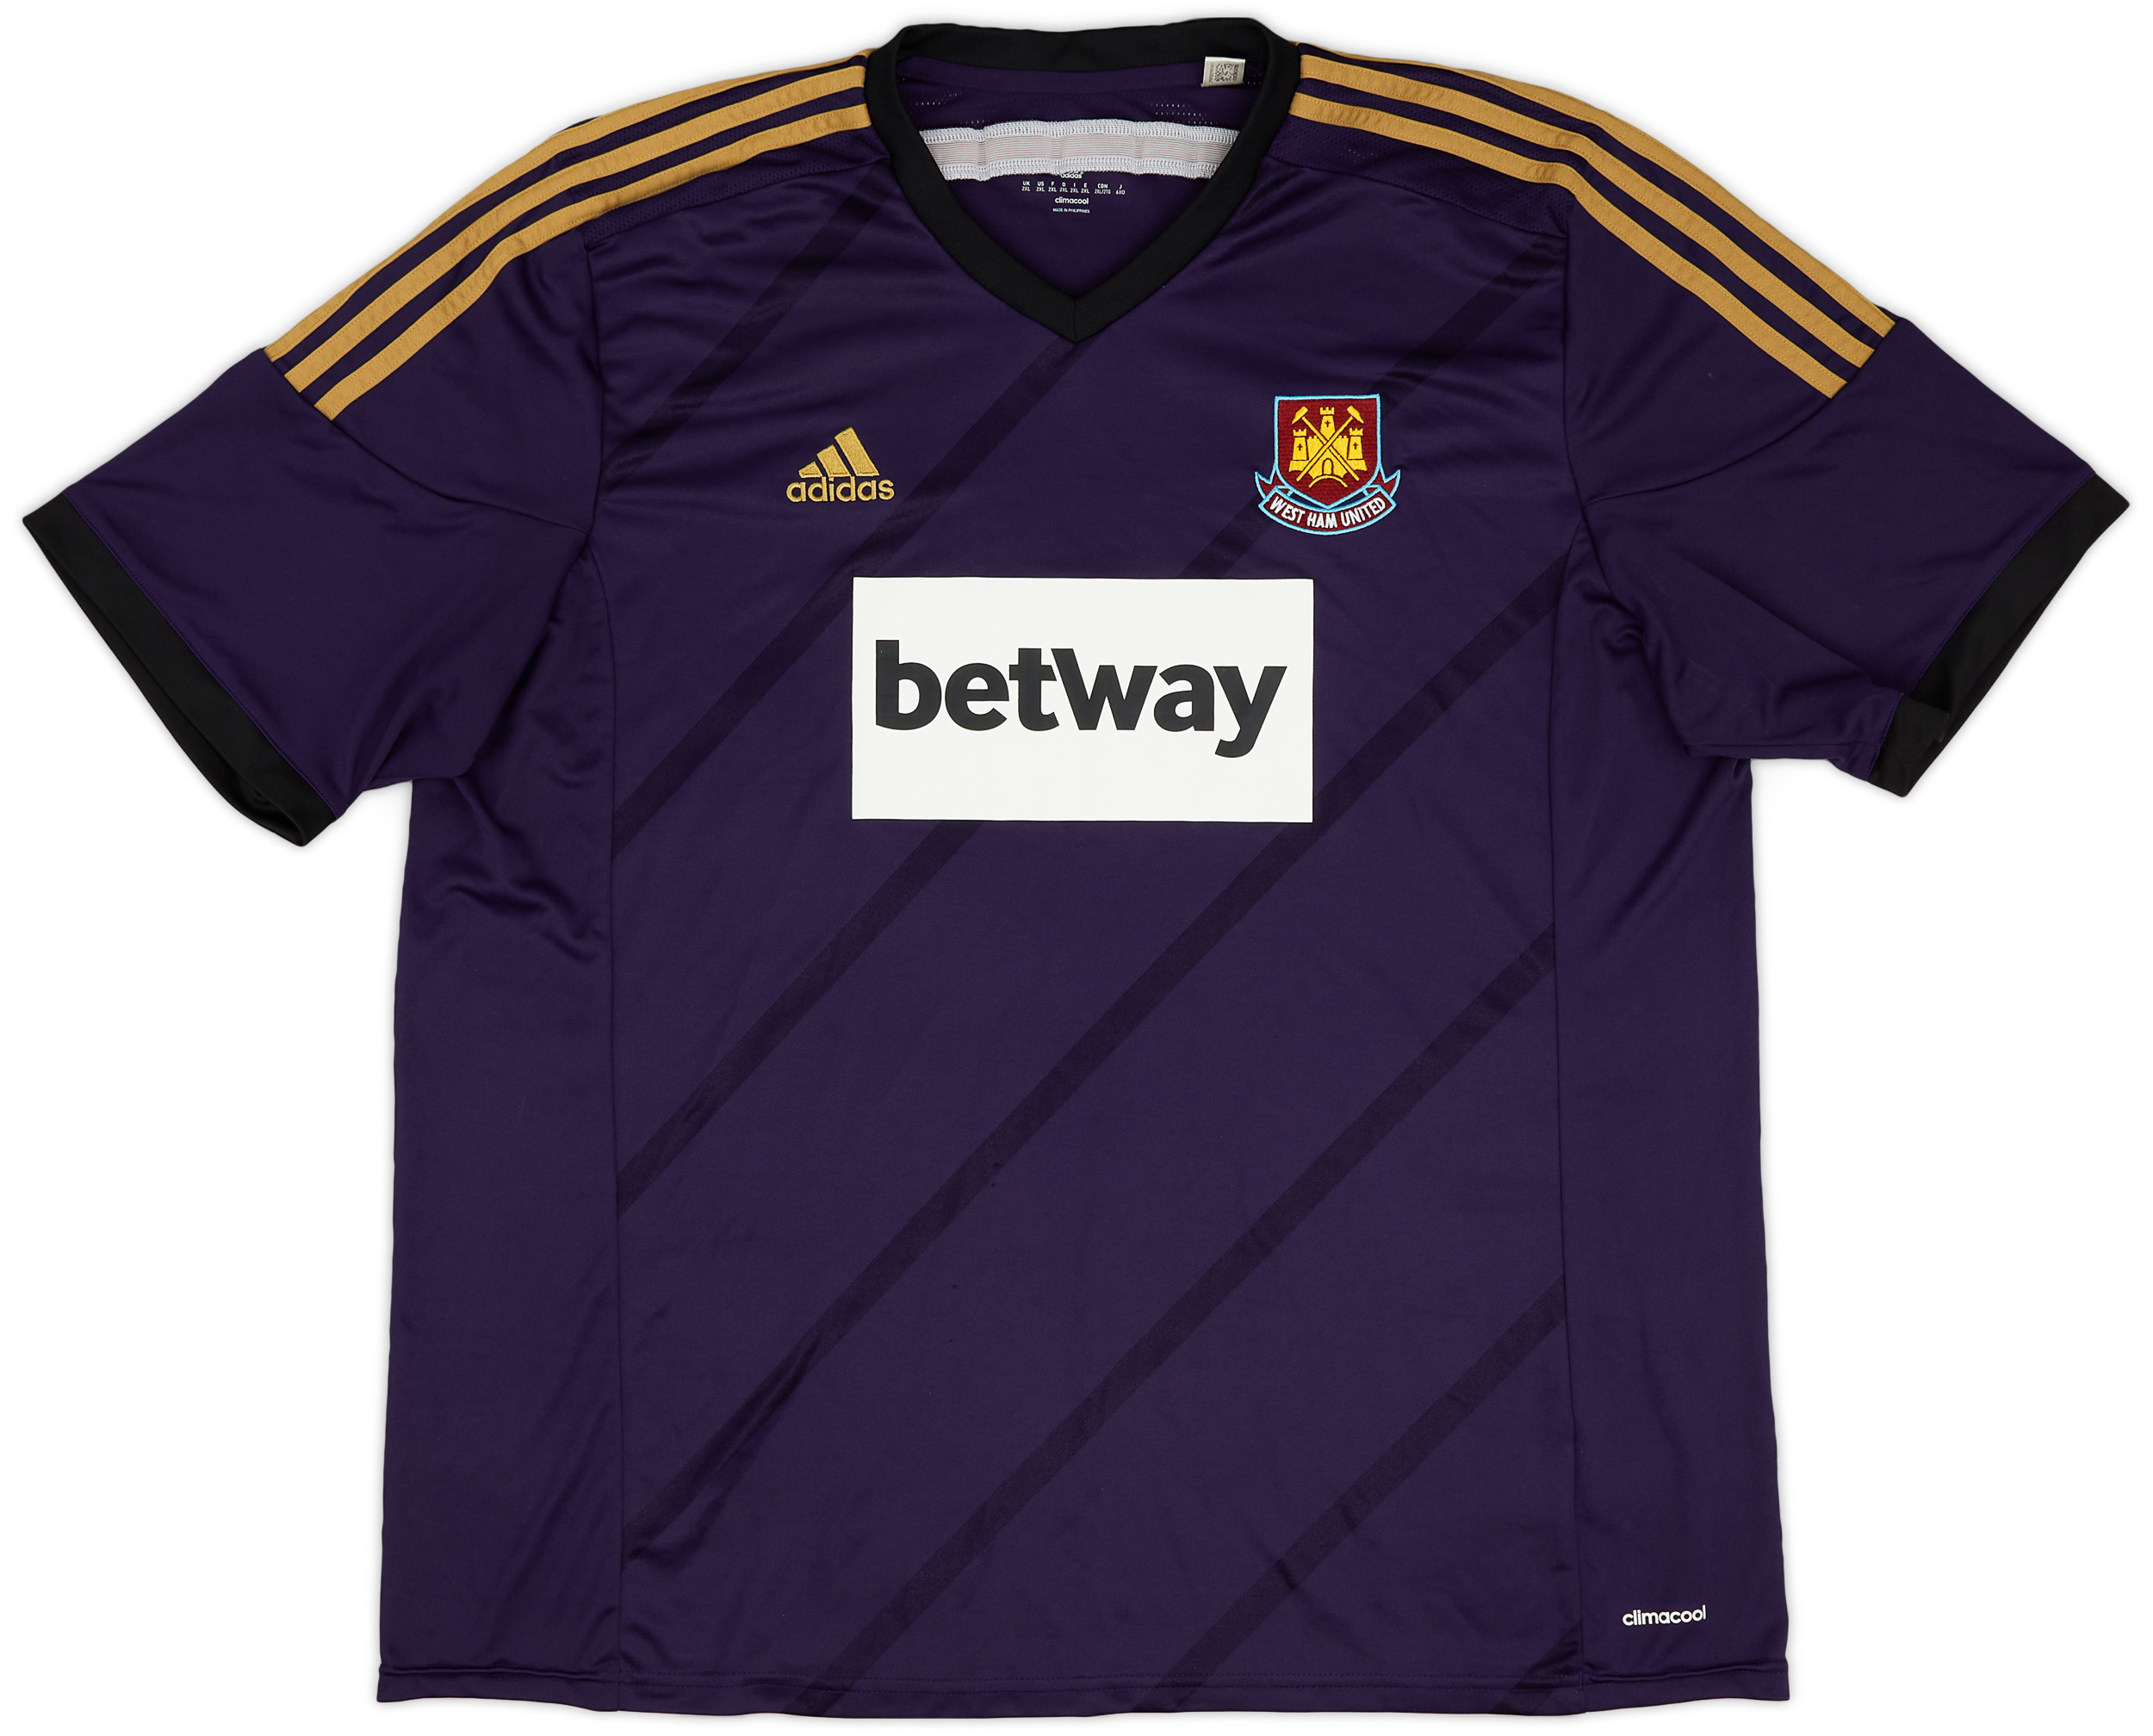 2014-15 West Ham United Third Shirt - 9/10 - ()